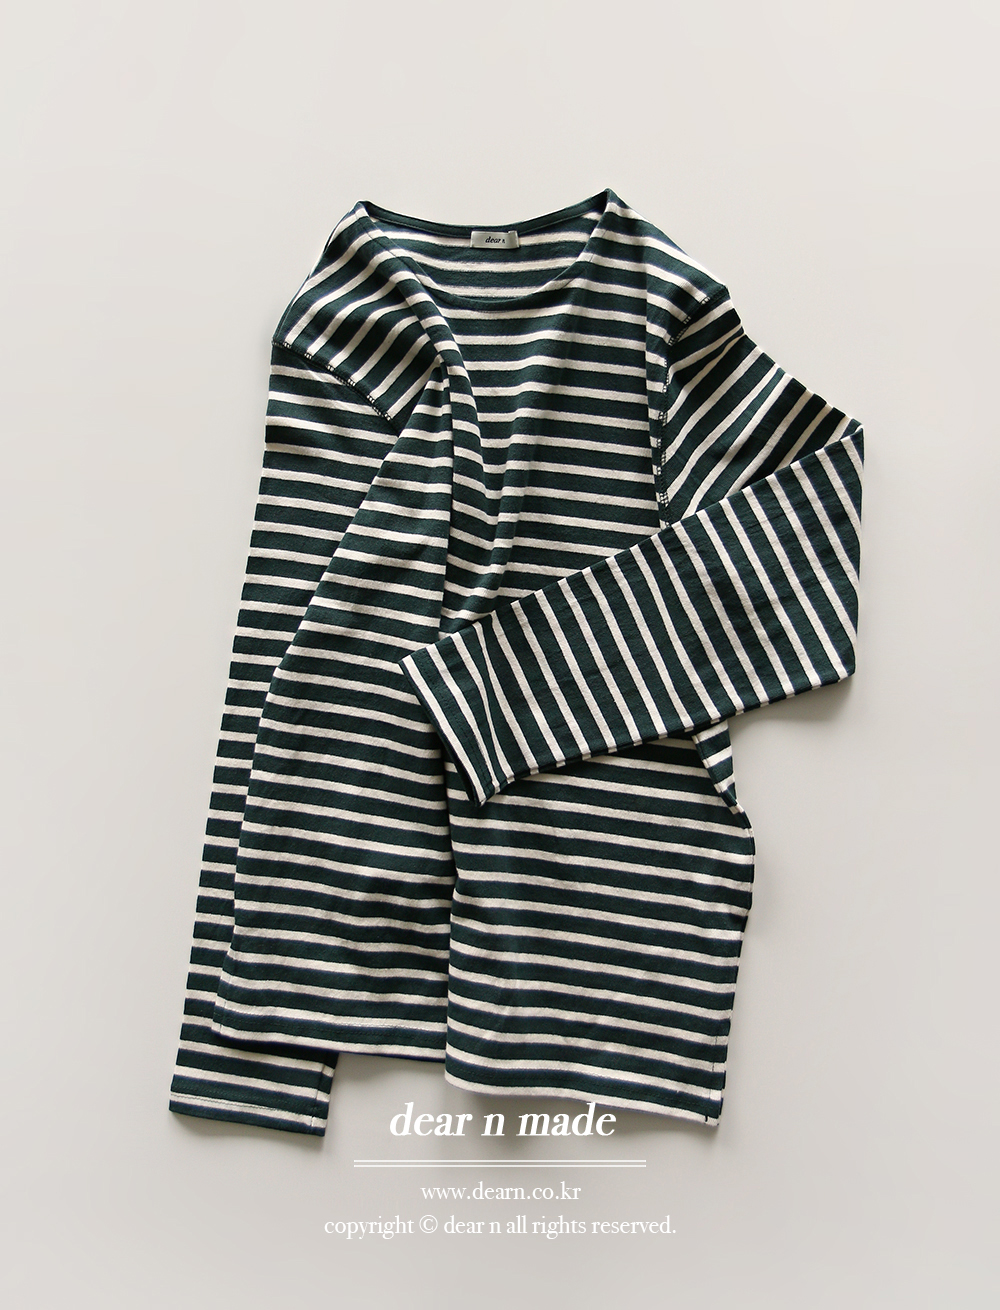 (dear n) stripe t-shirt (6c)